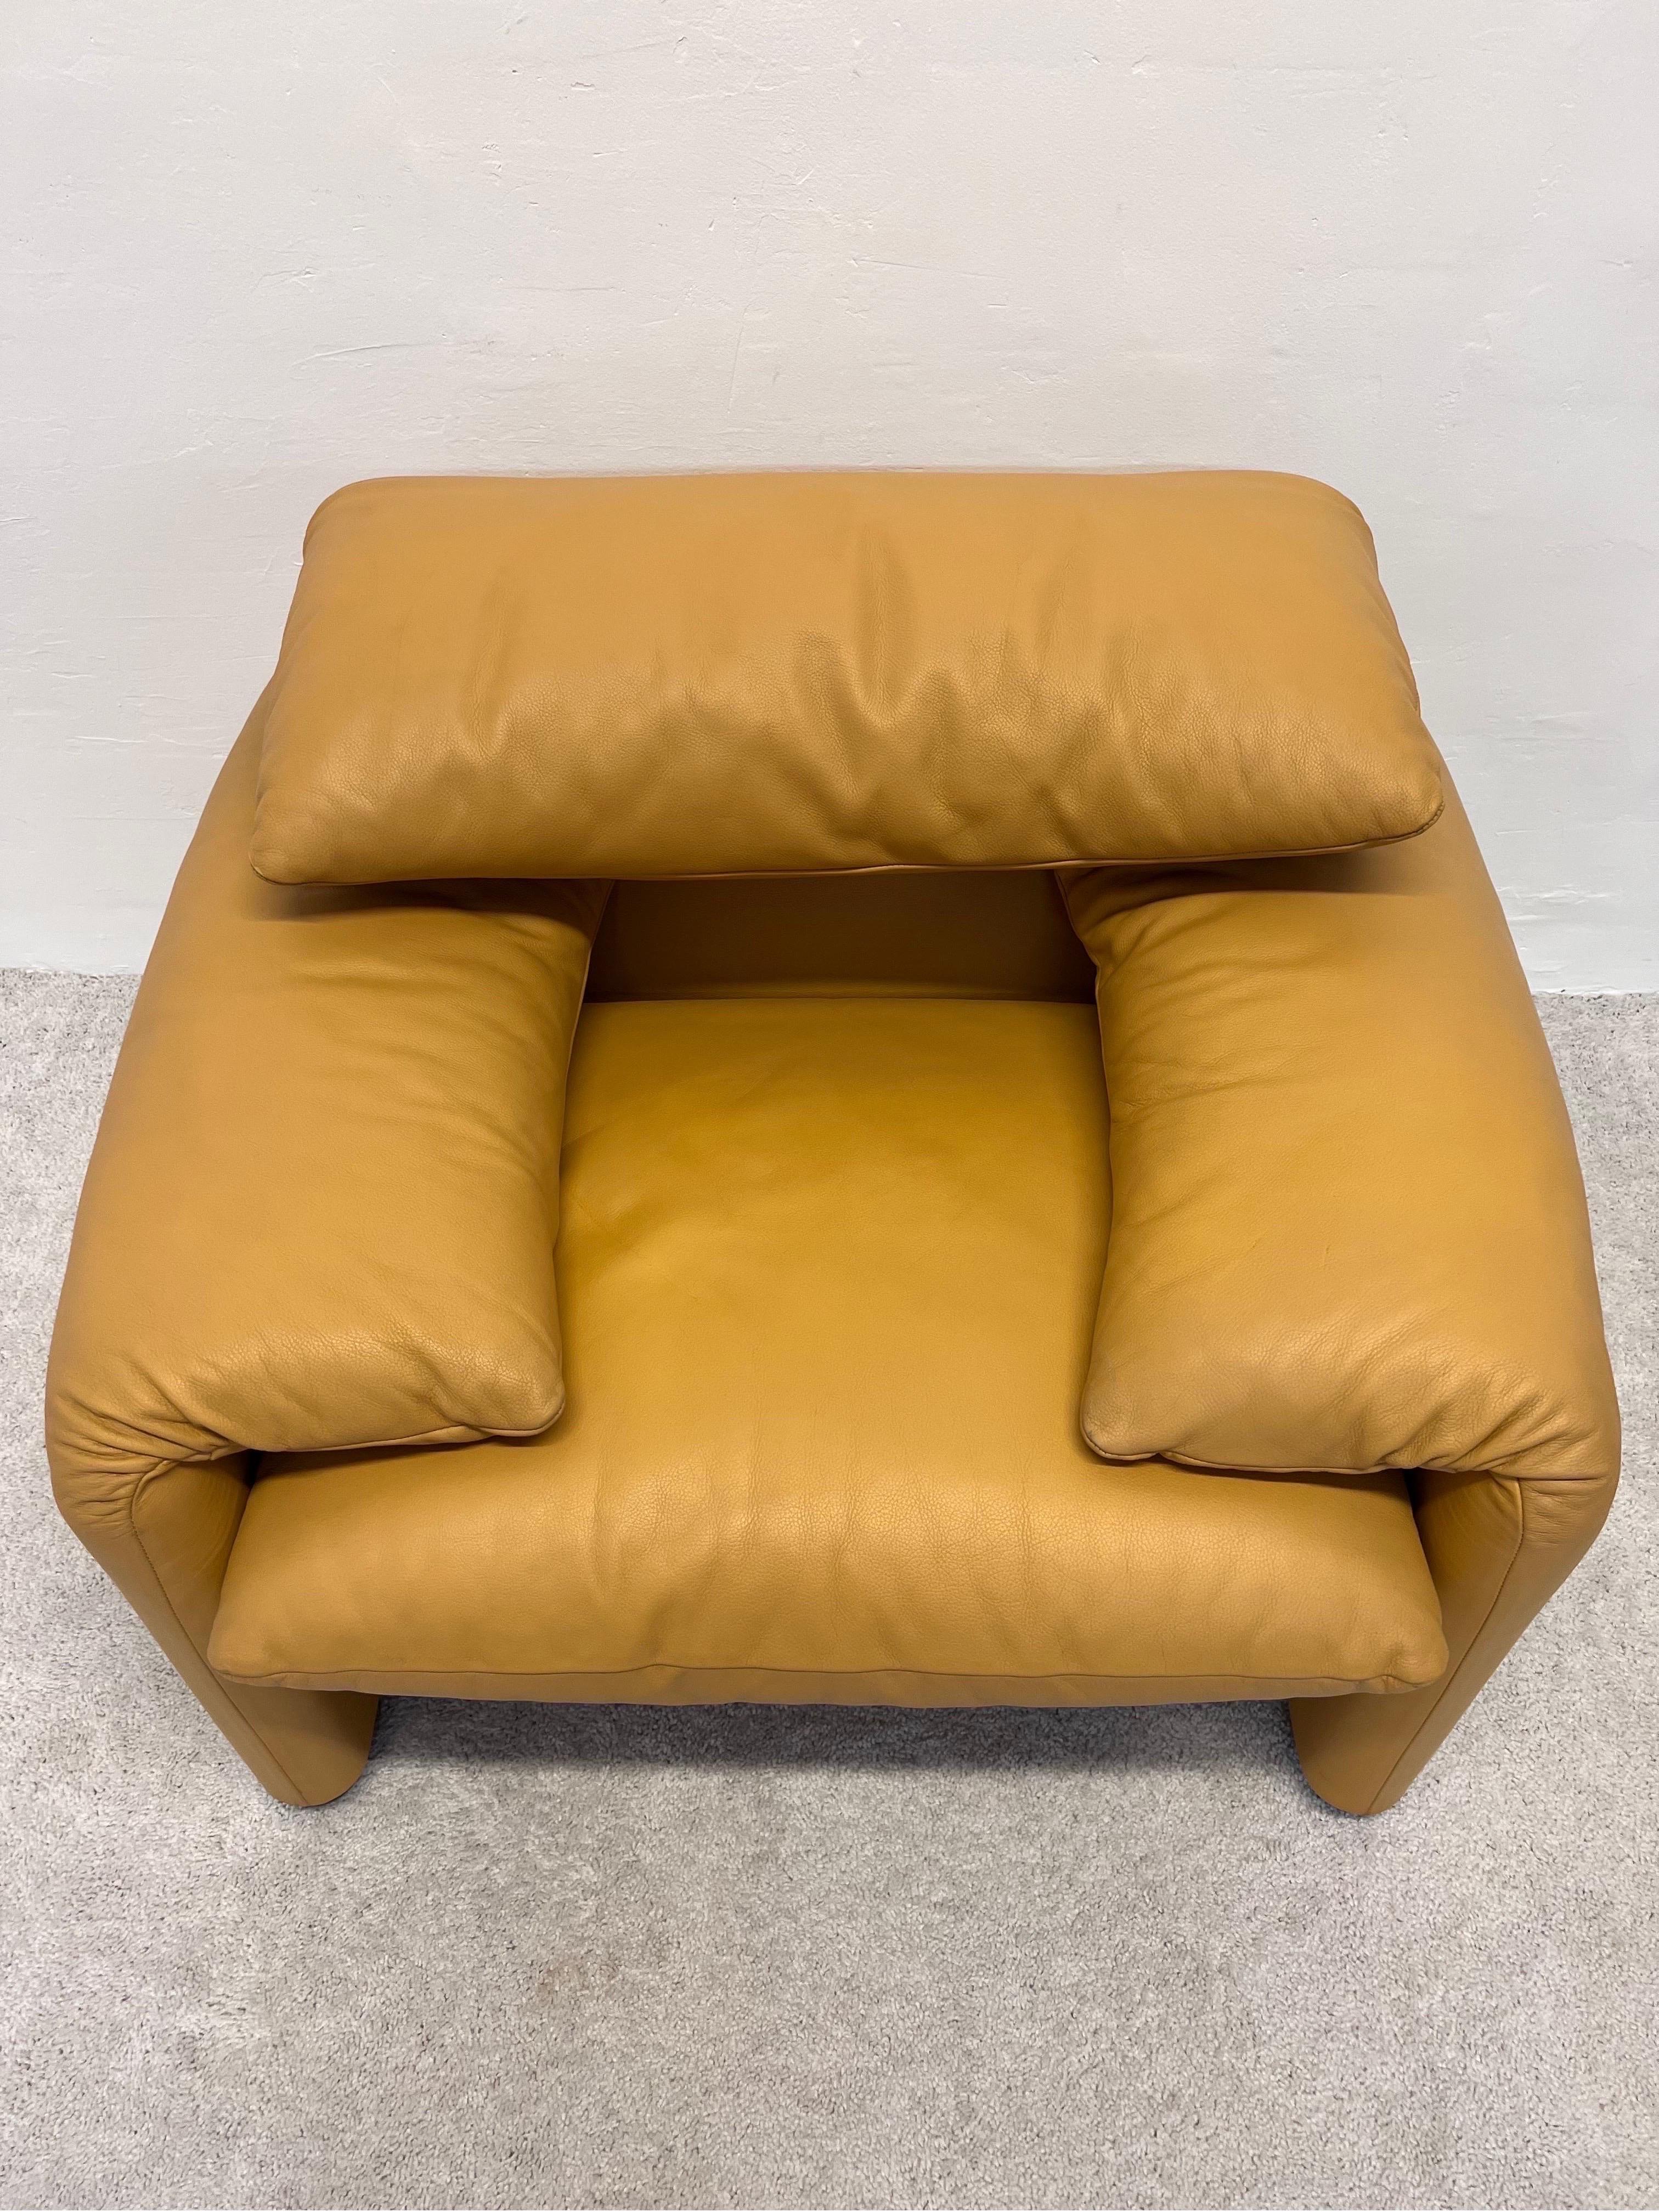 Steel Vico Magistretti Maralunga Leather Lounge Chair for Cassina, 1980s